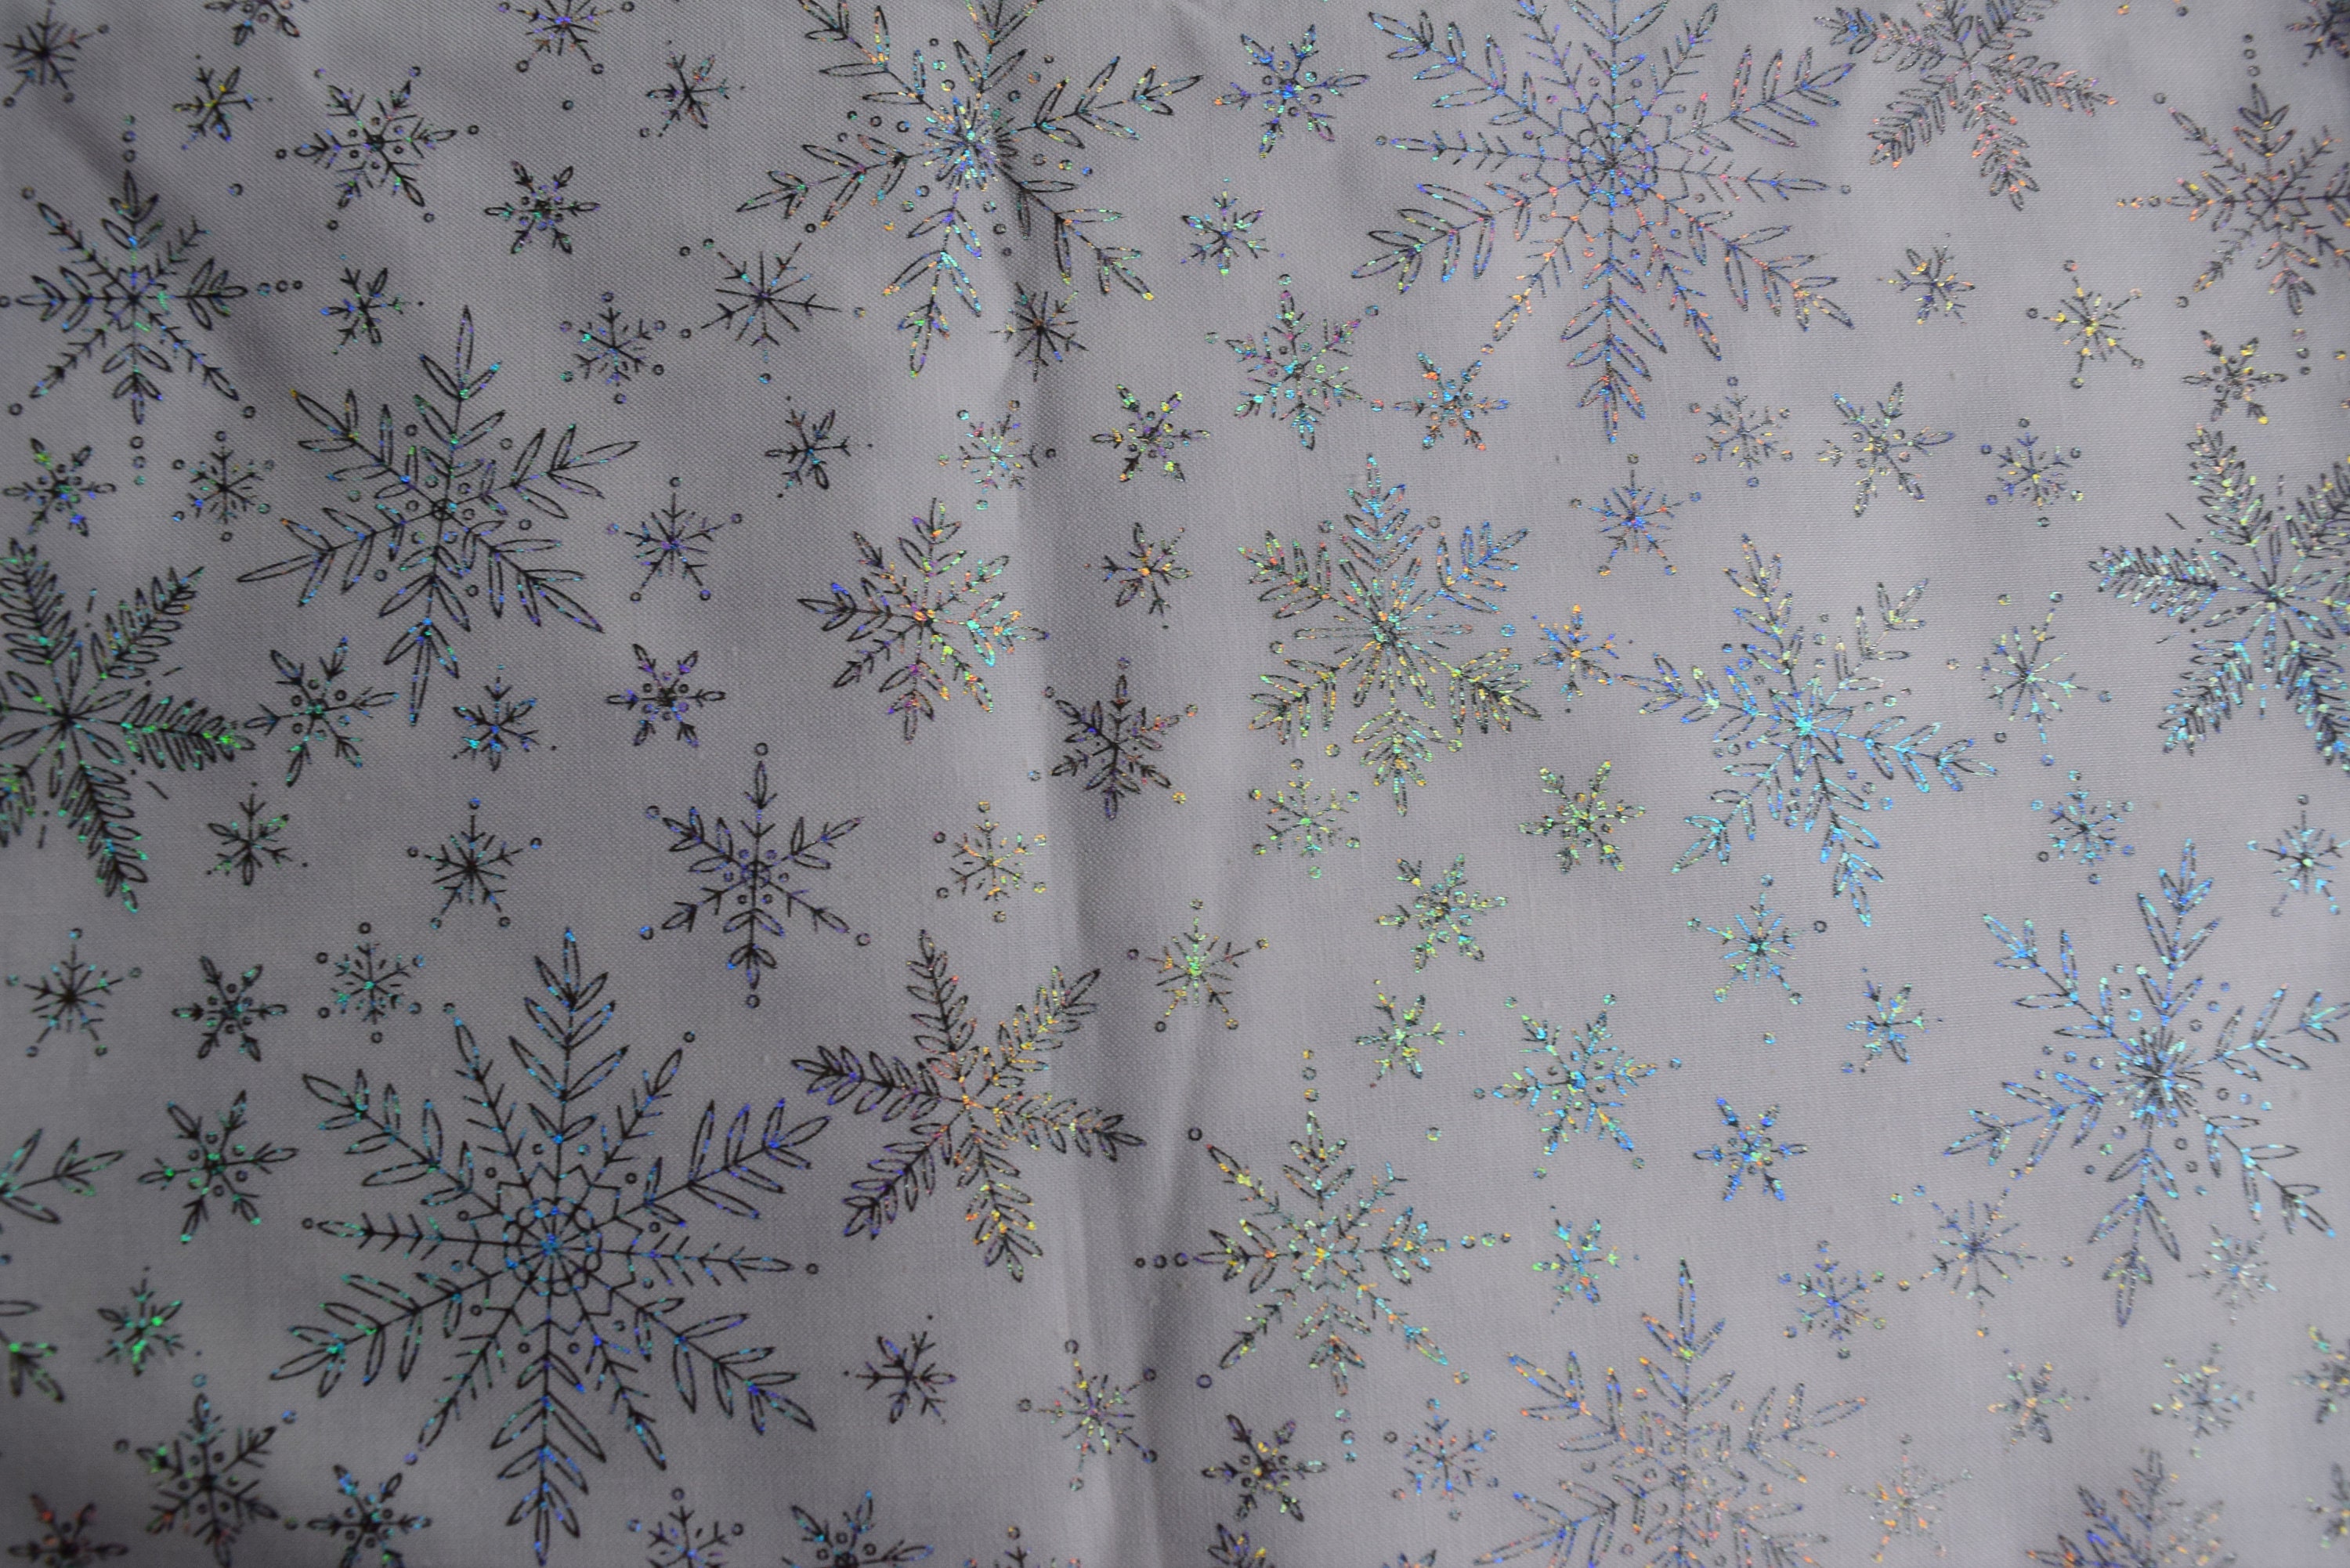 Silver Glitter Snowflake Clip Art. Christmas Snowflake 